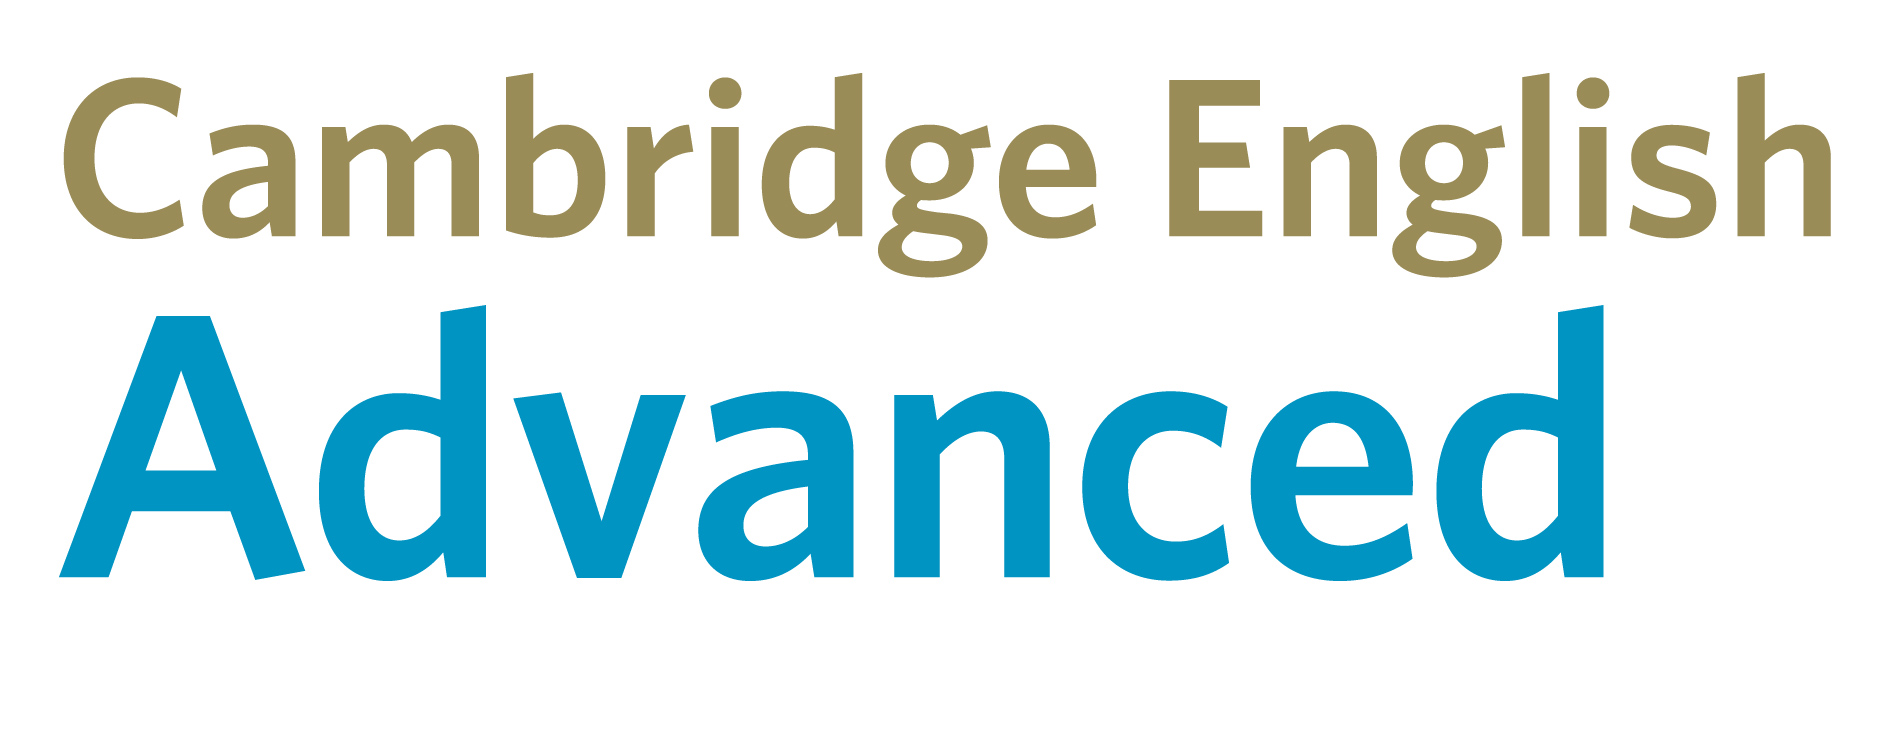 File:Cambridge English Advanced logo.jpg - Wikipedia